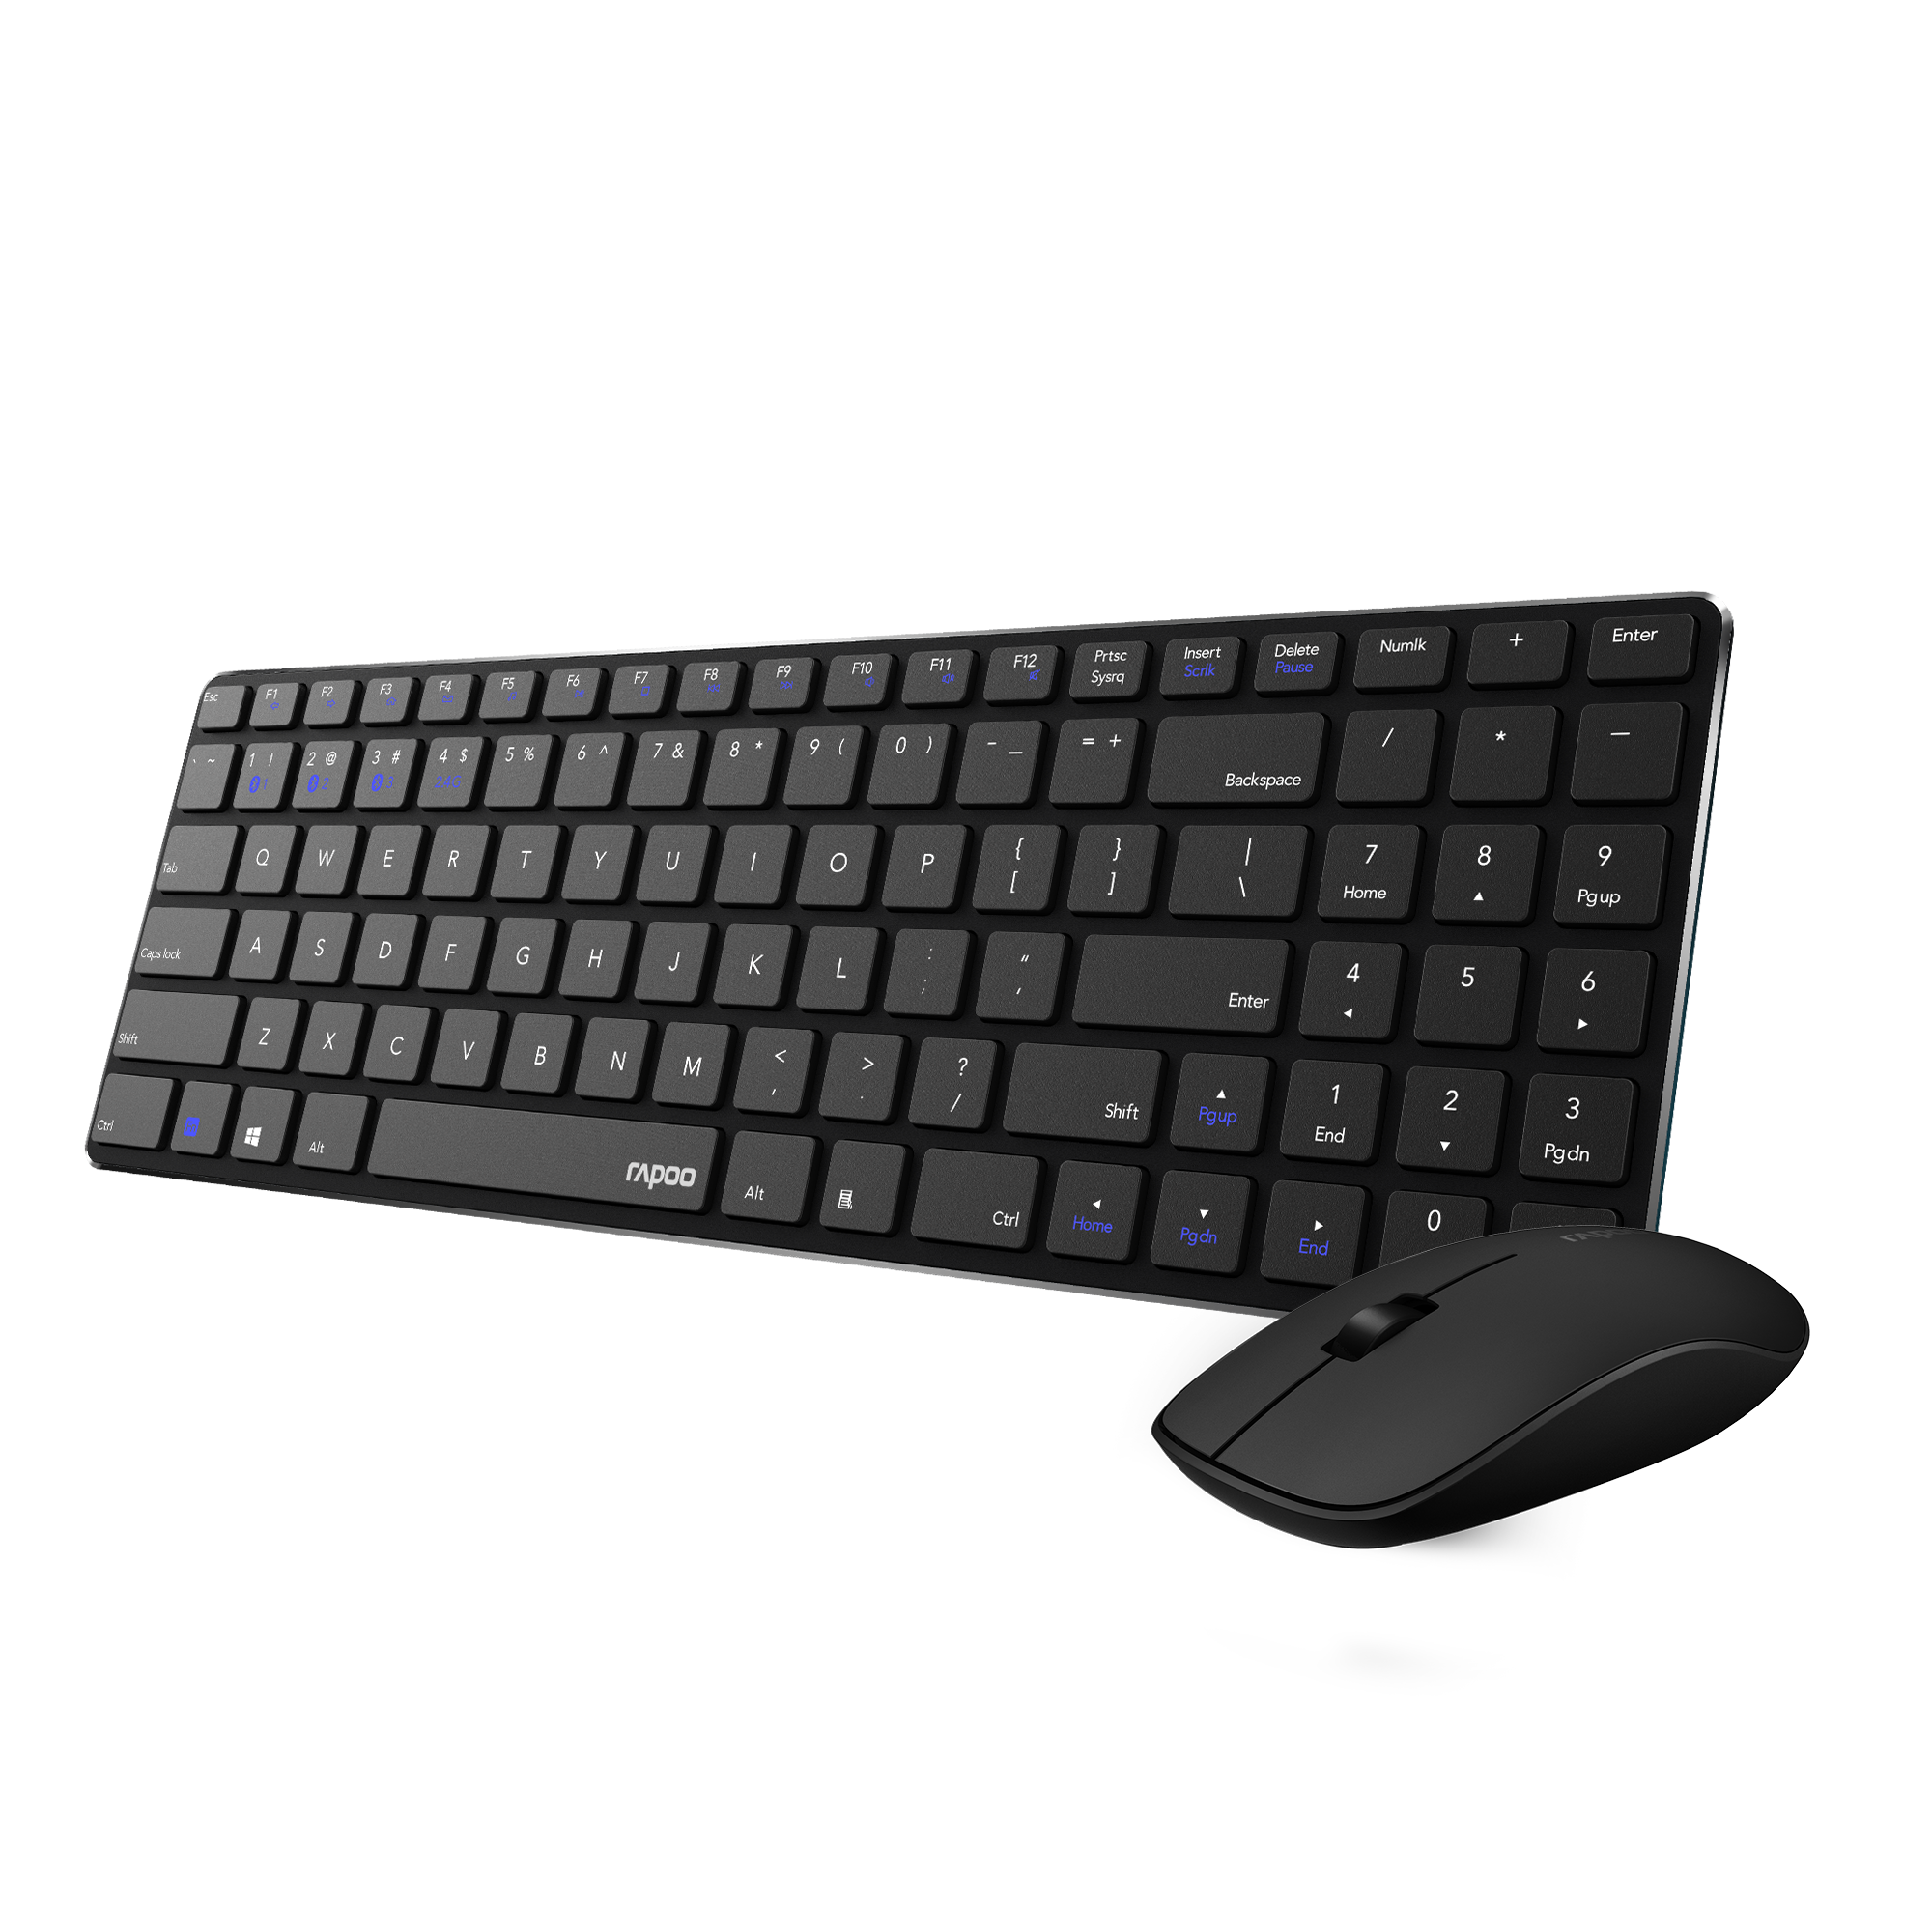 Rapoo 9300M Multi-Mode Wireless Ultra-slim Desktop Keyboard And Mouse Set